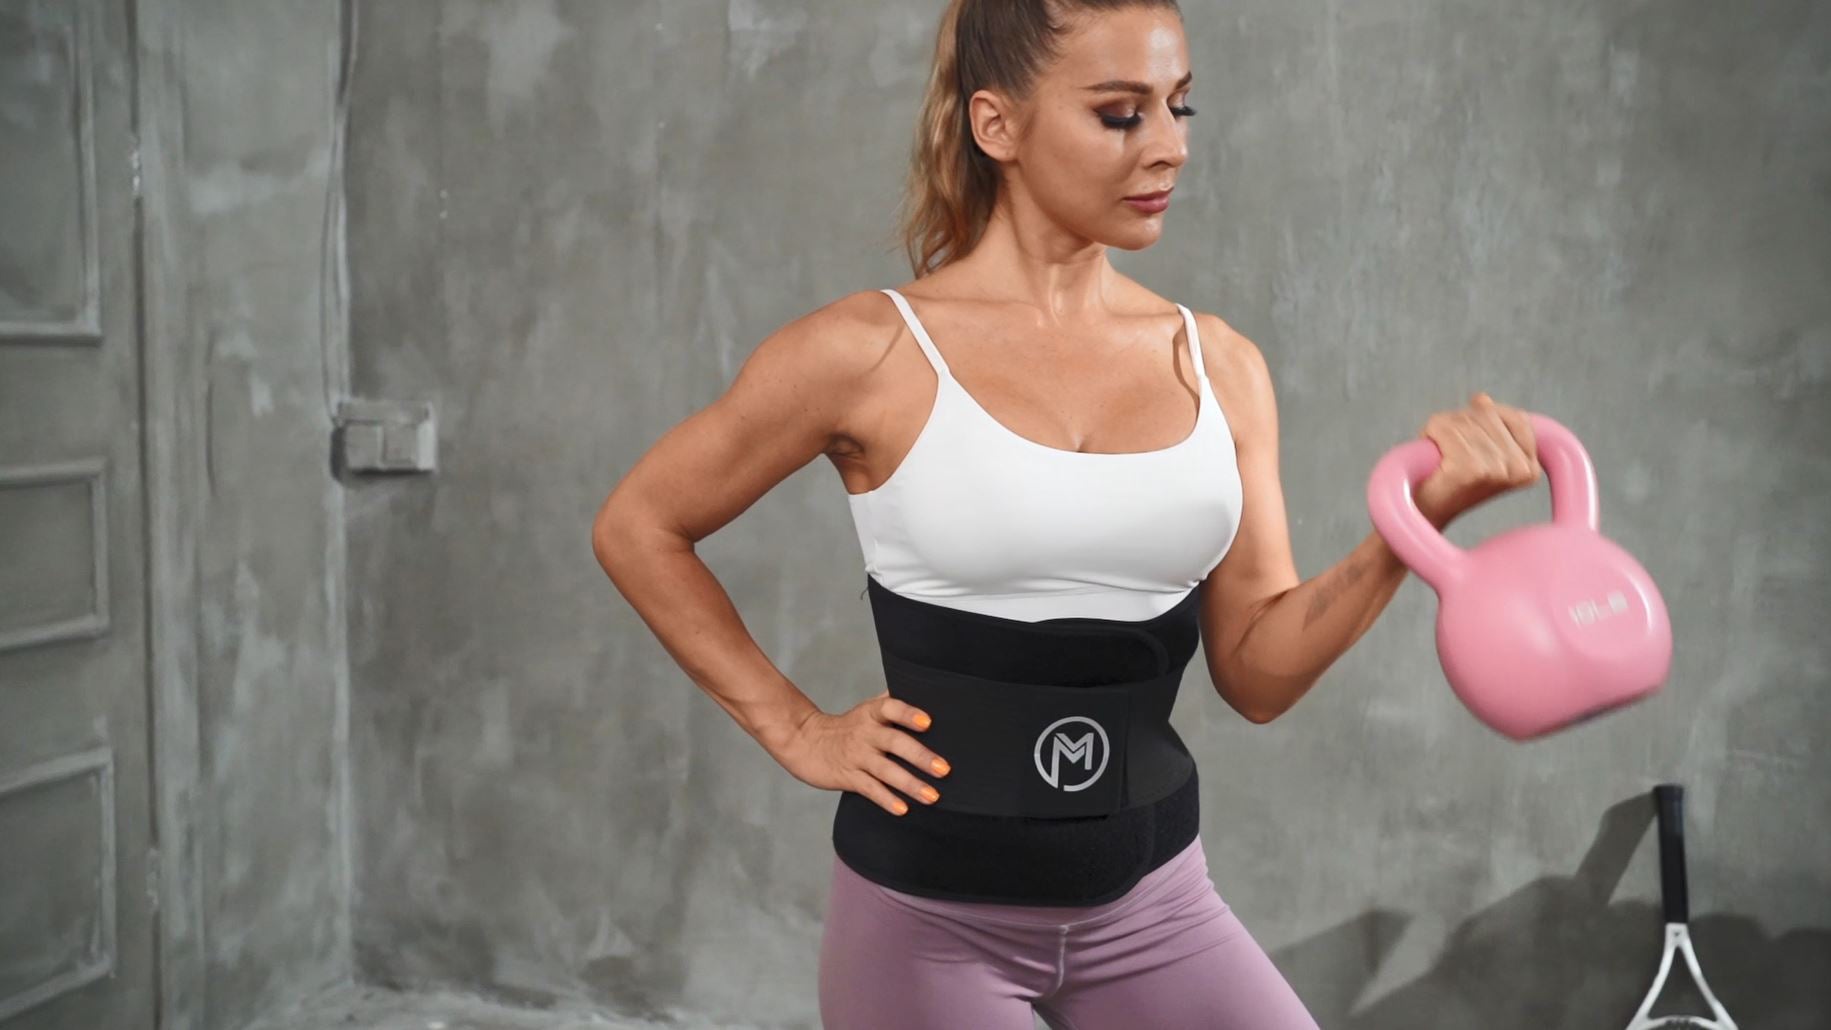 MERMAID'S MYSTERY Waist Trainer for Women Weight Loss Trimmer Belt Sport Sweat Workout Body Shaper S Black